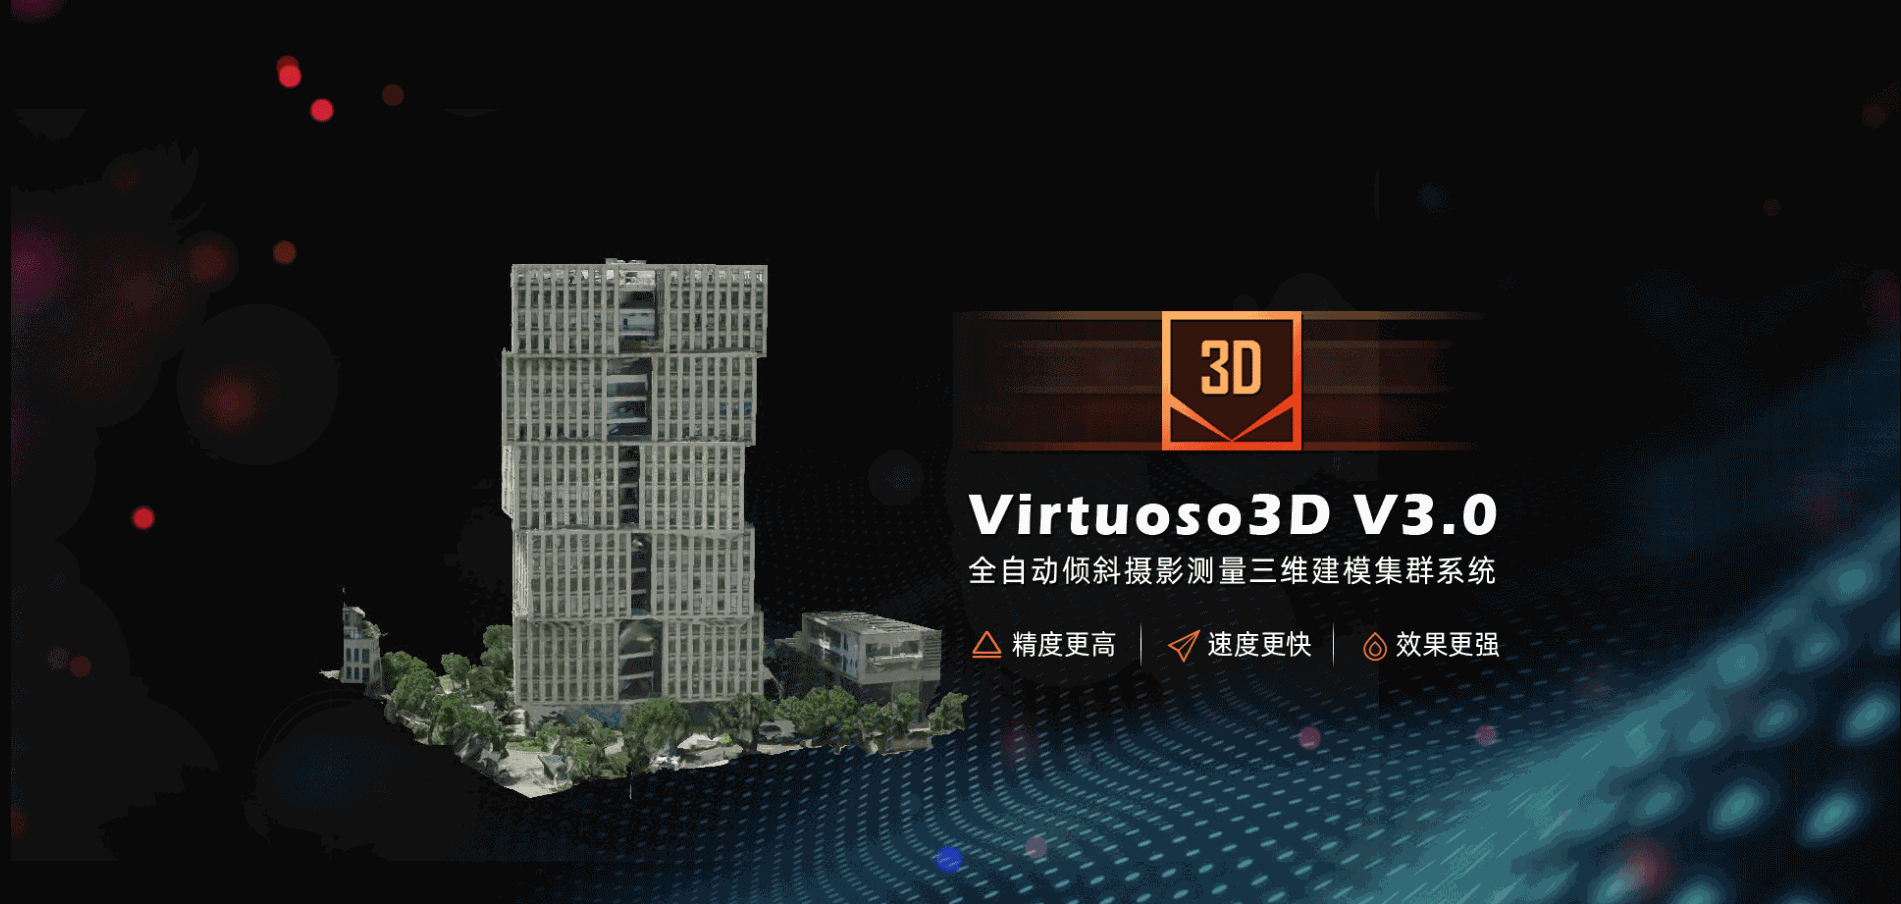 2021.11.22 Virtuoso3D V3.0 banner图